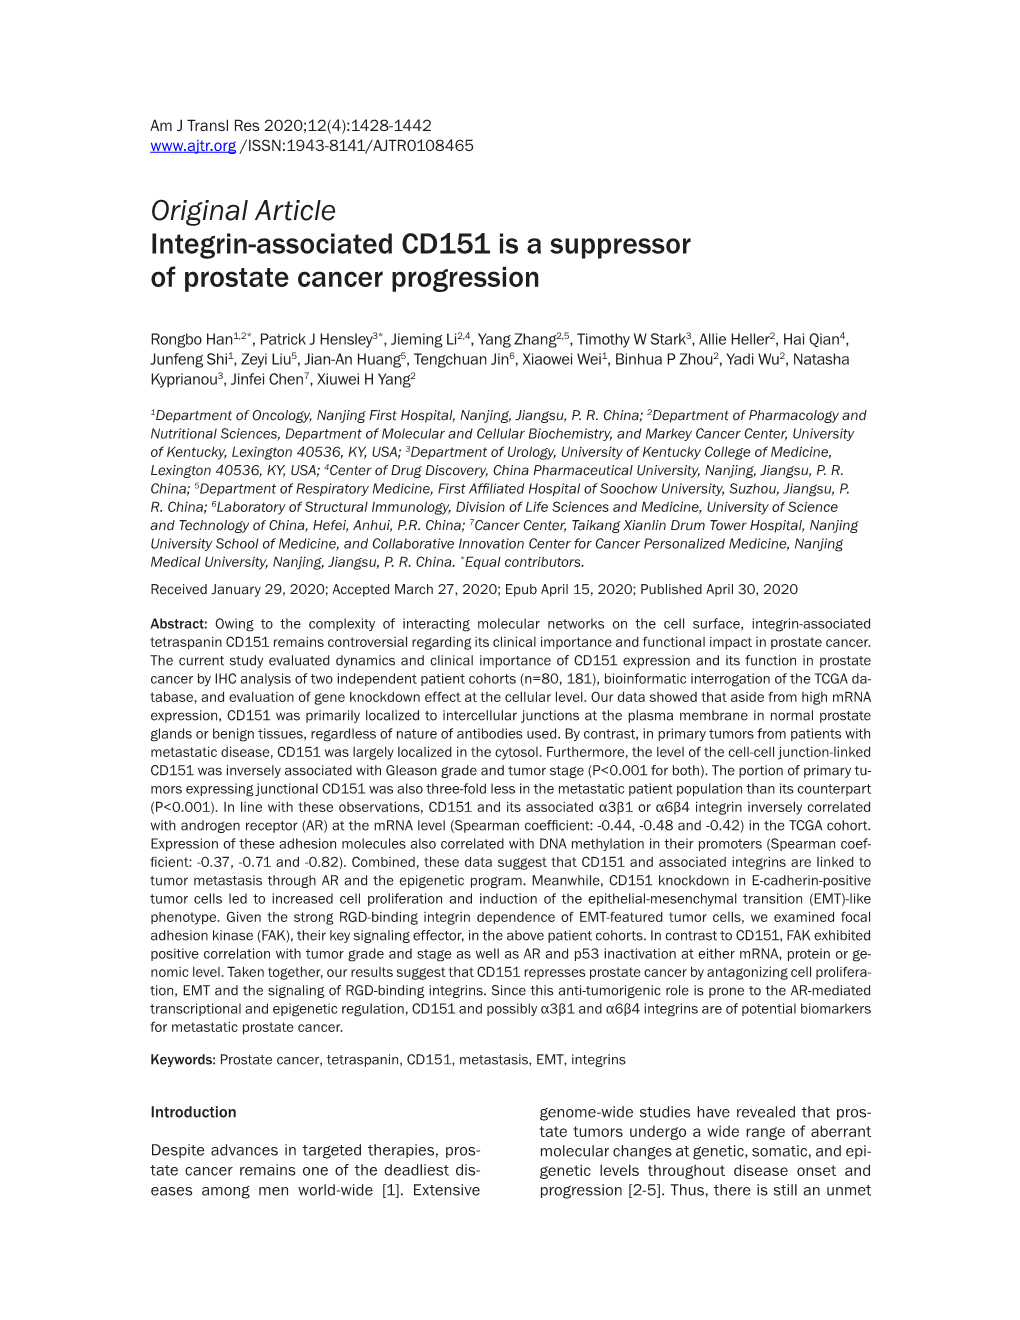 Original Article Integrin-Associated CD151 Is a Suppressor of Prostate Cancer Progression